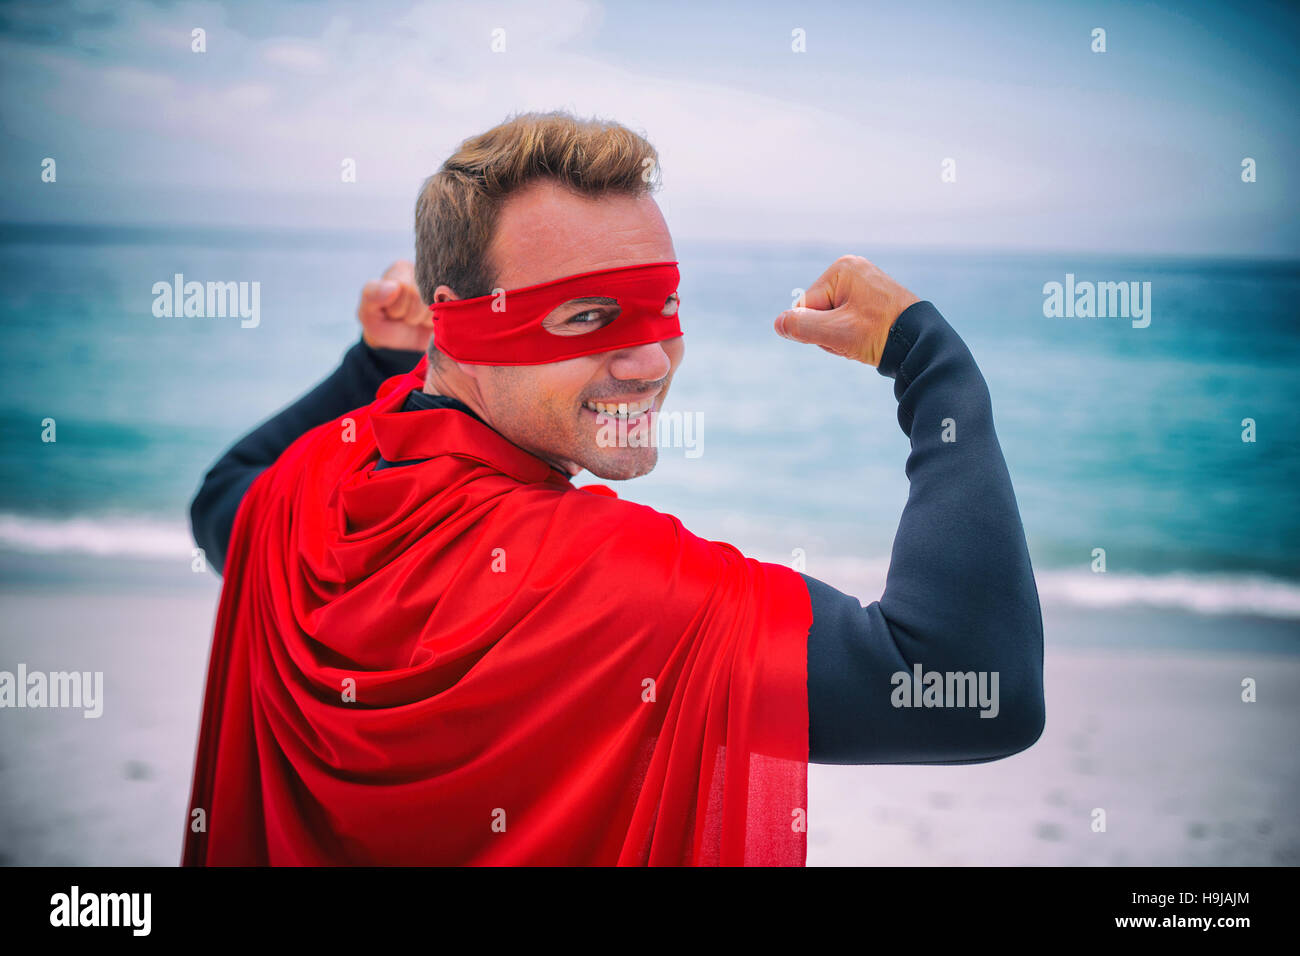 Man in superhero costume flexing muscles at sea shore Stock Photo